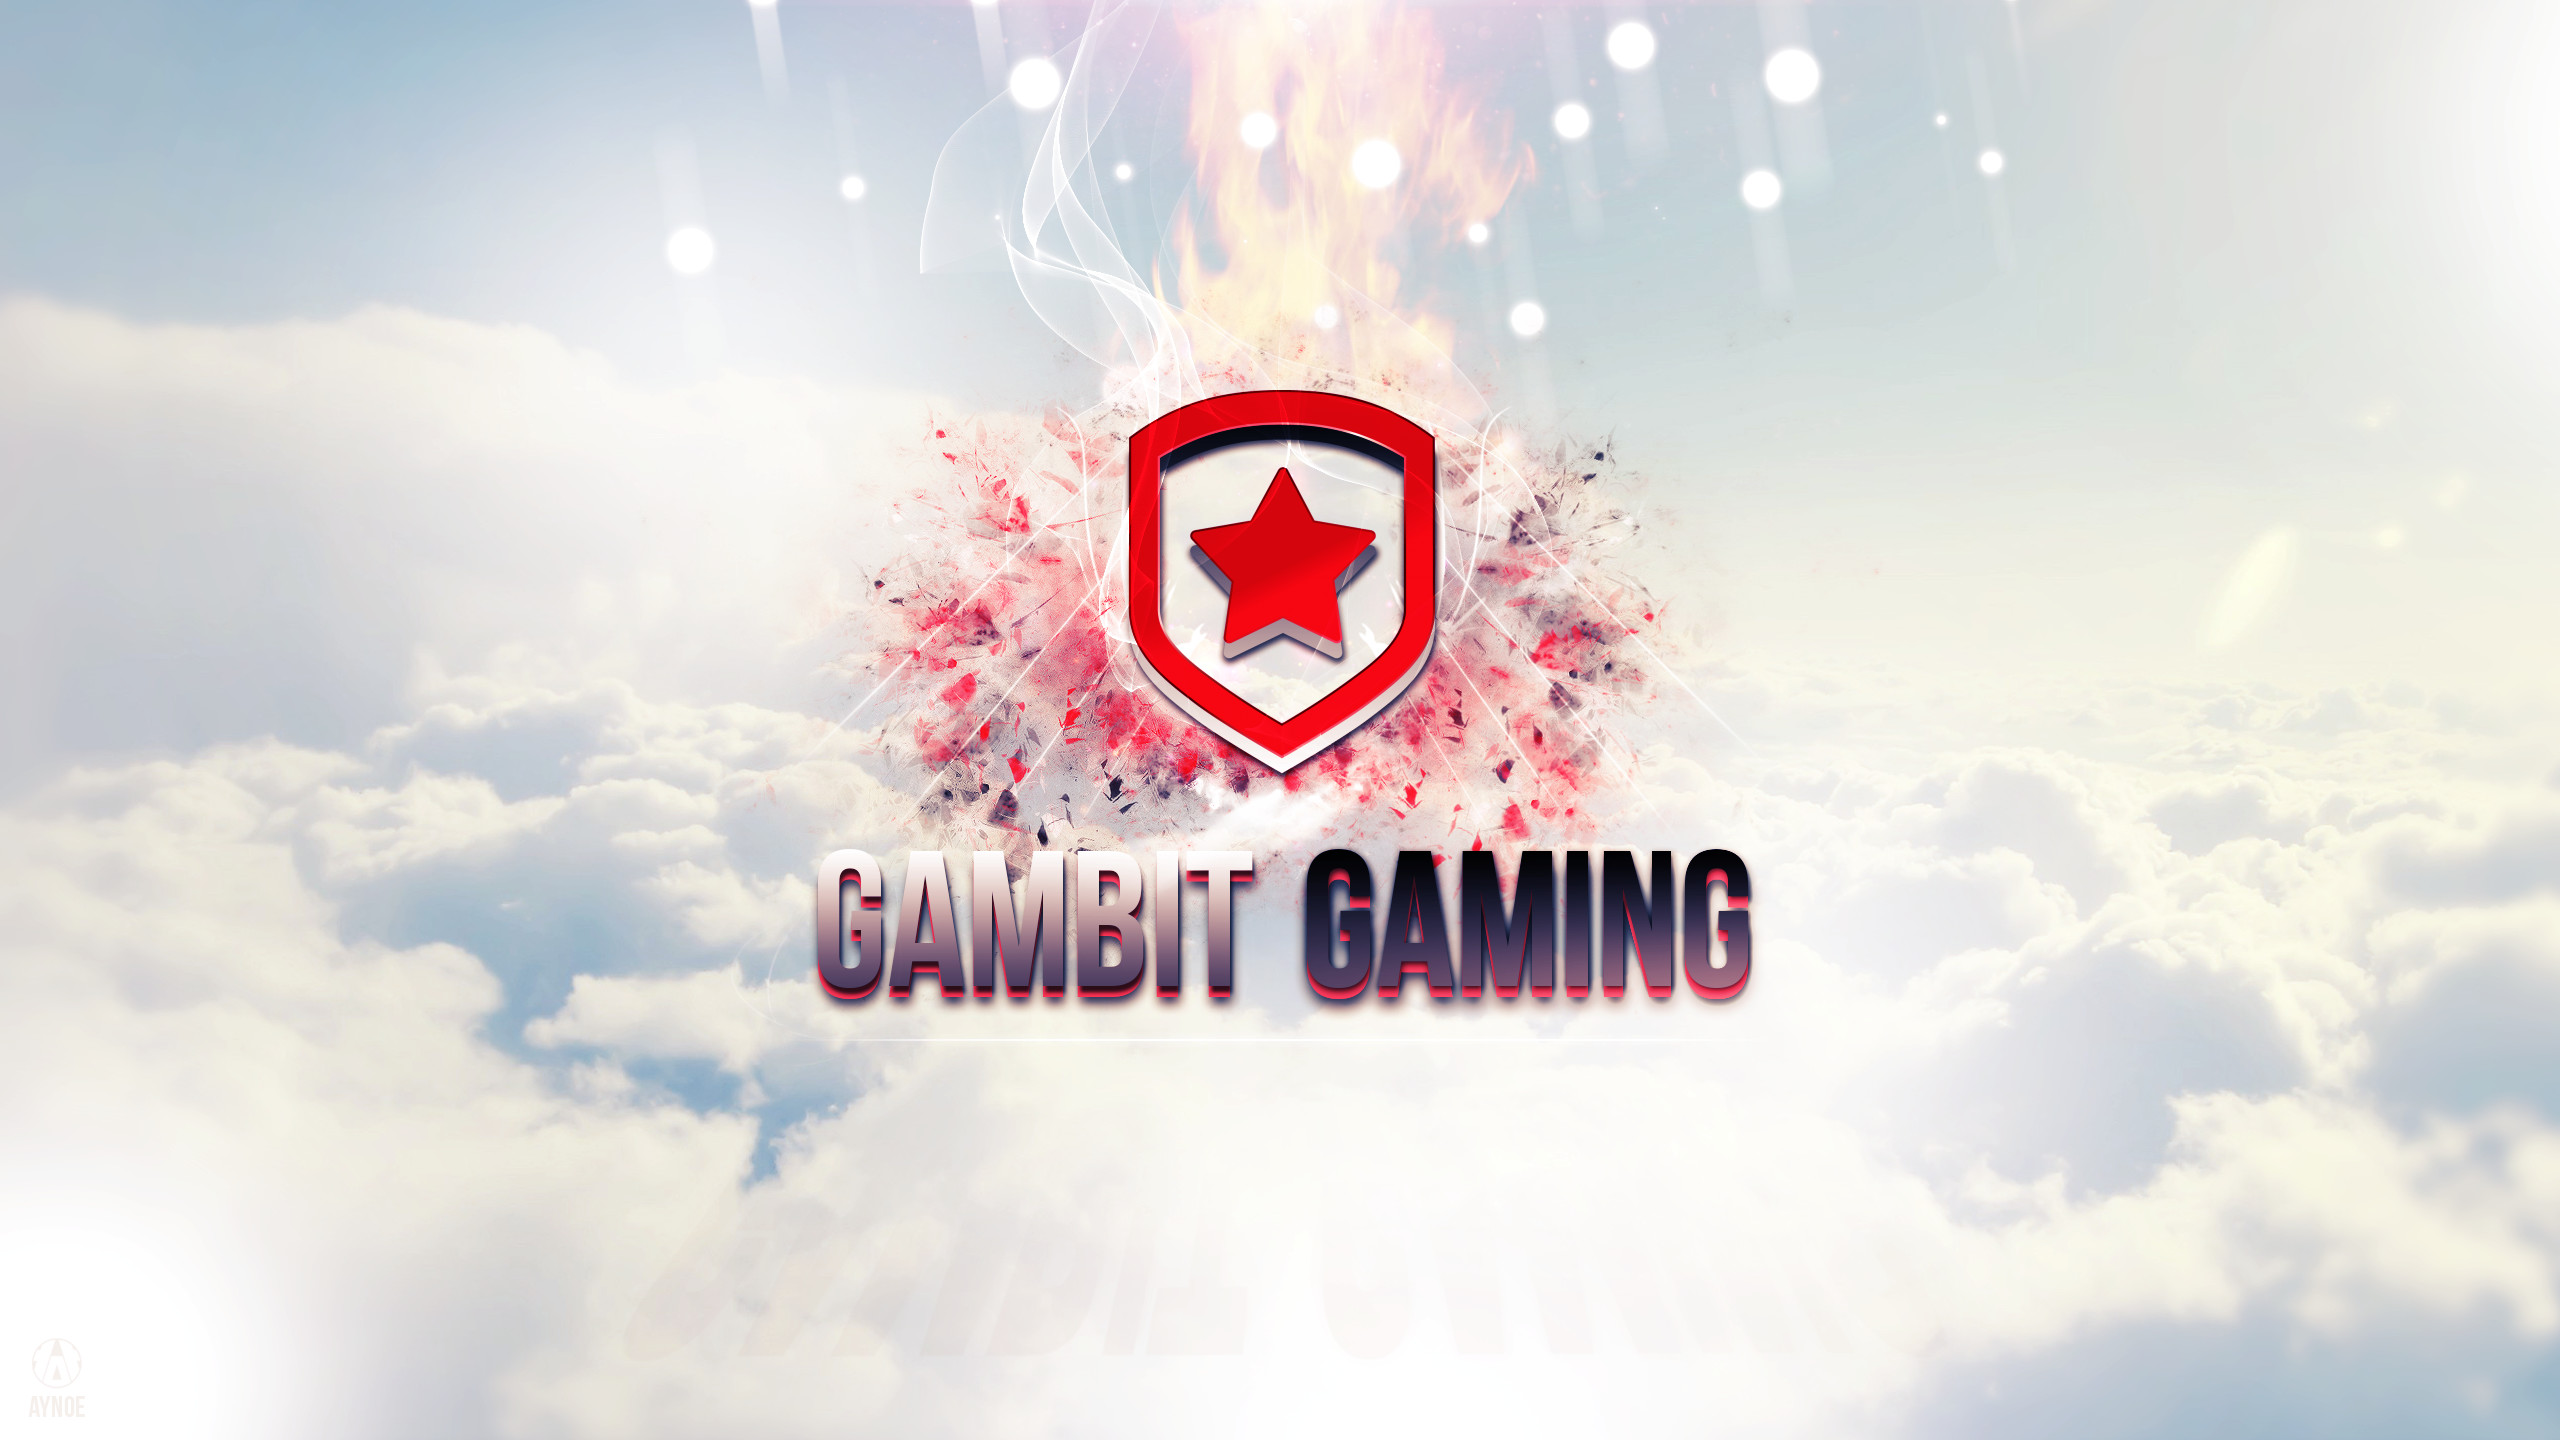 2560x1440 ... Gambit Gaming Wallpaper Logo - League of Legends by Aynoe